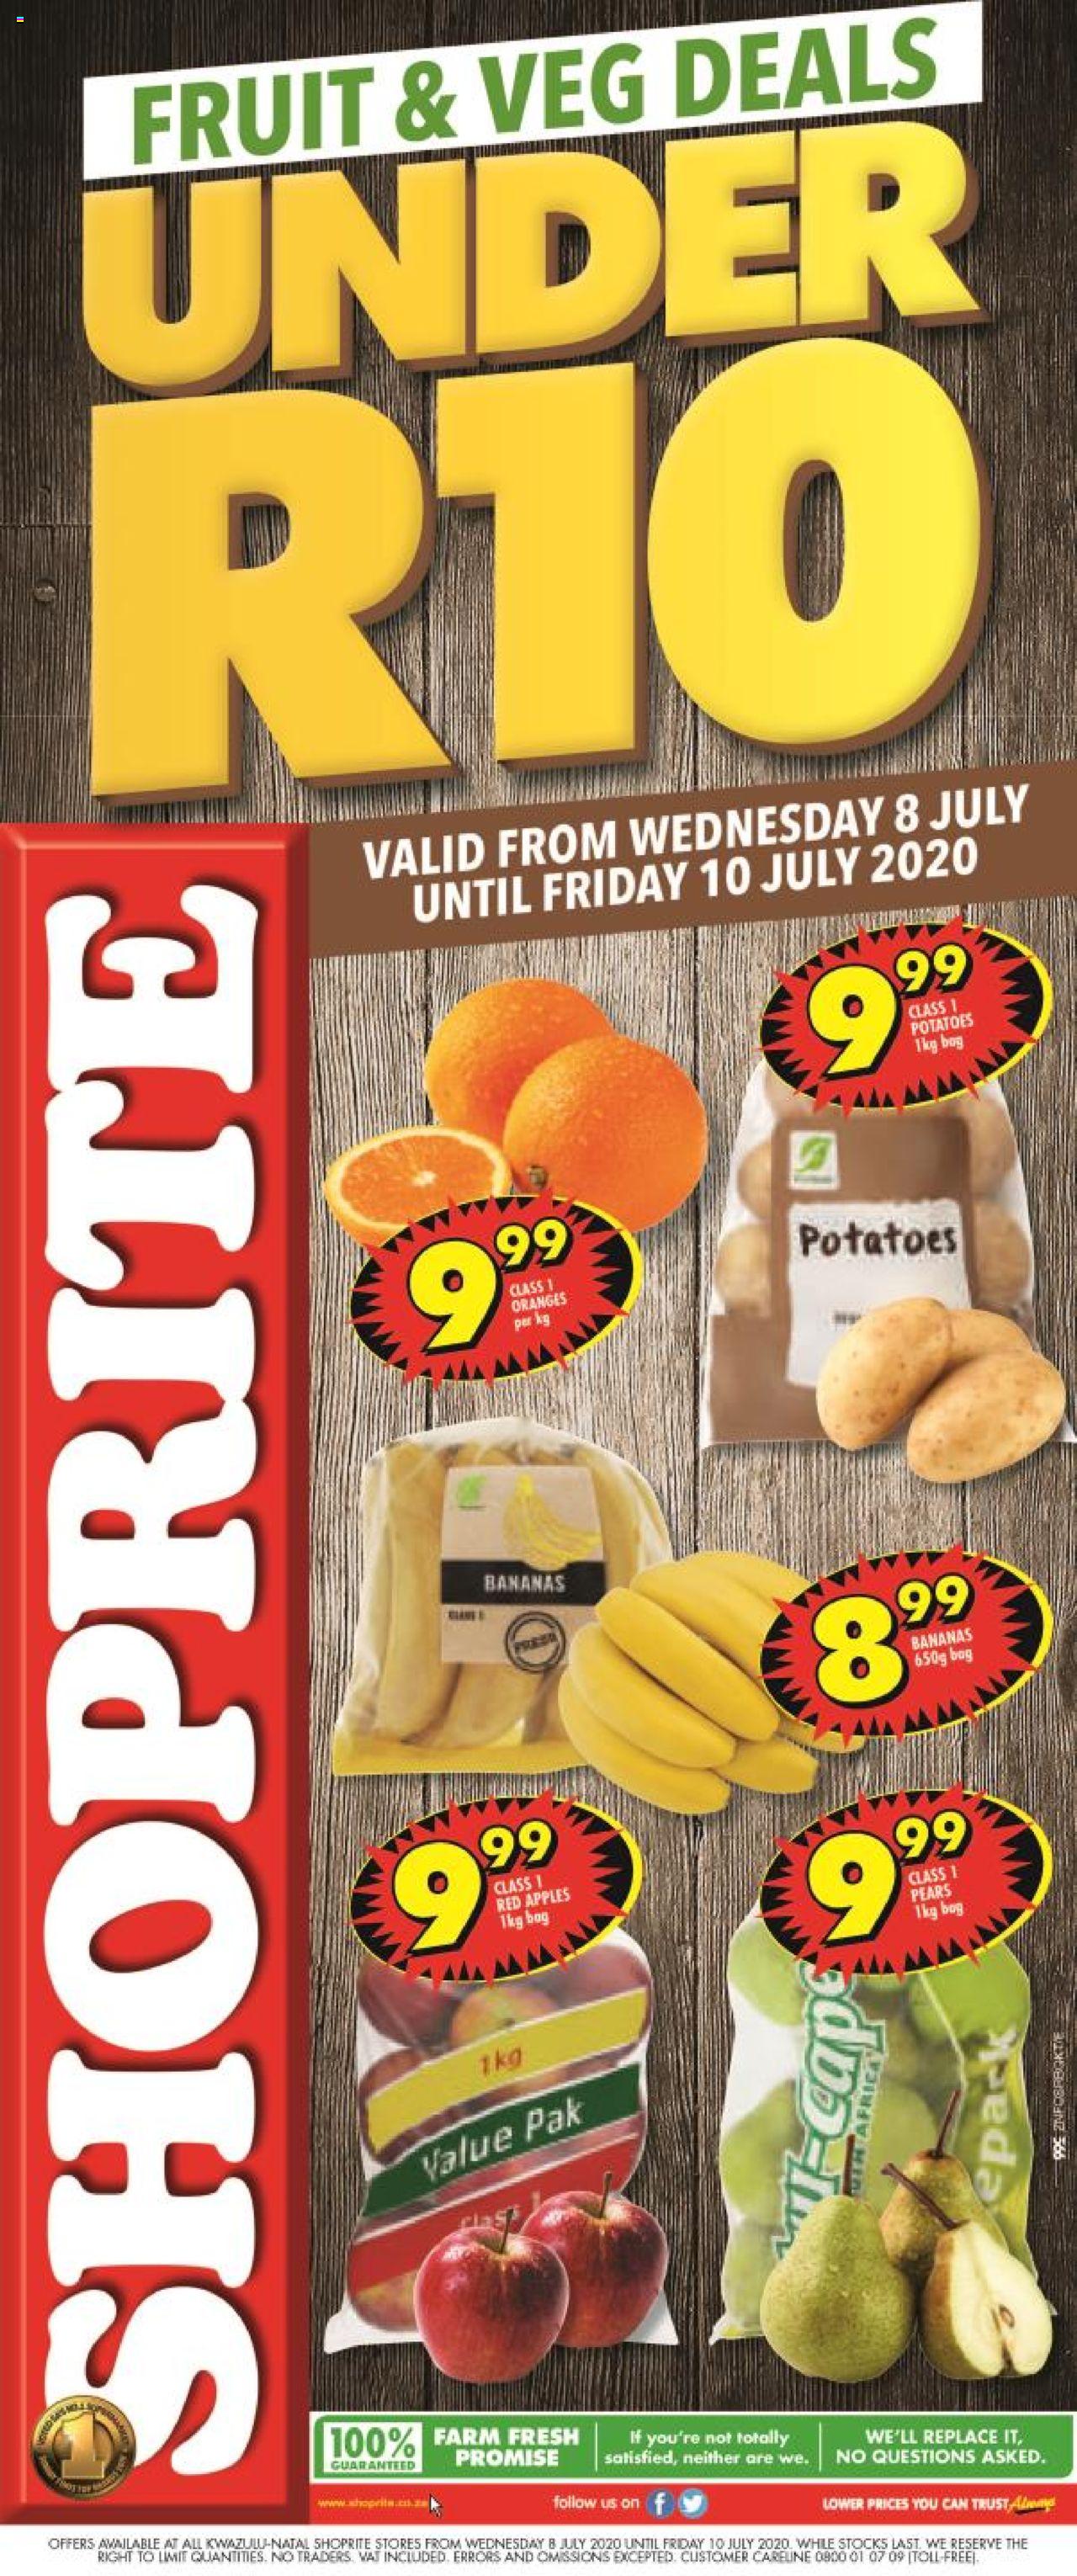 Shoprite Specials Fruit and Veg Deals 8 July 2020